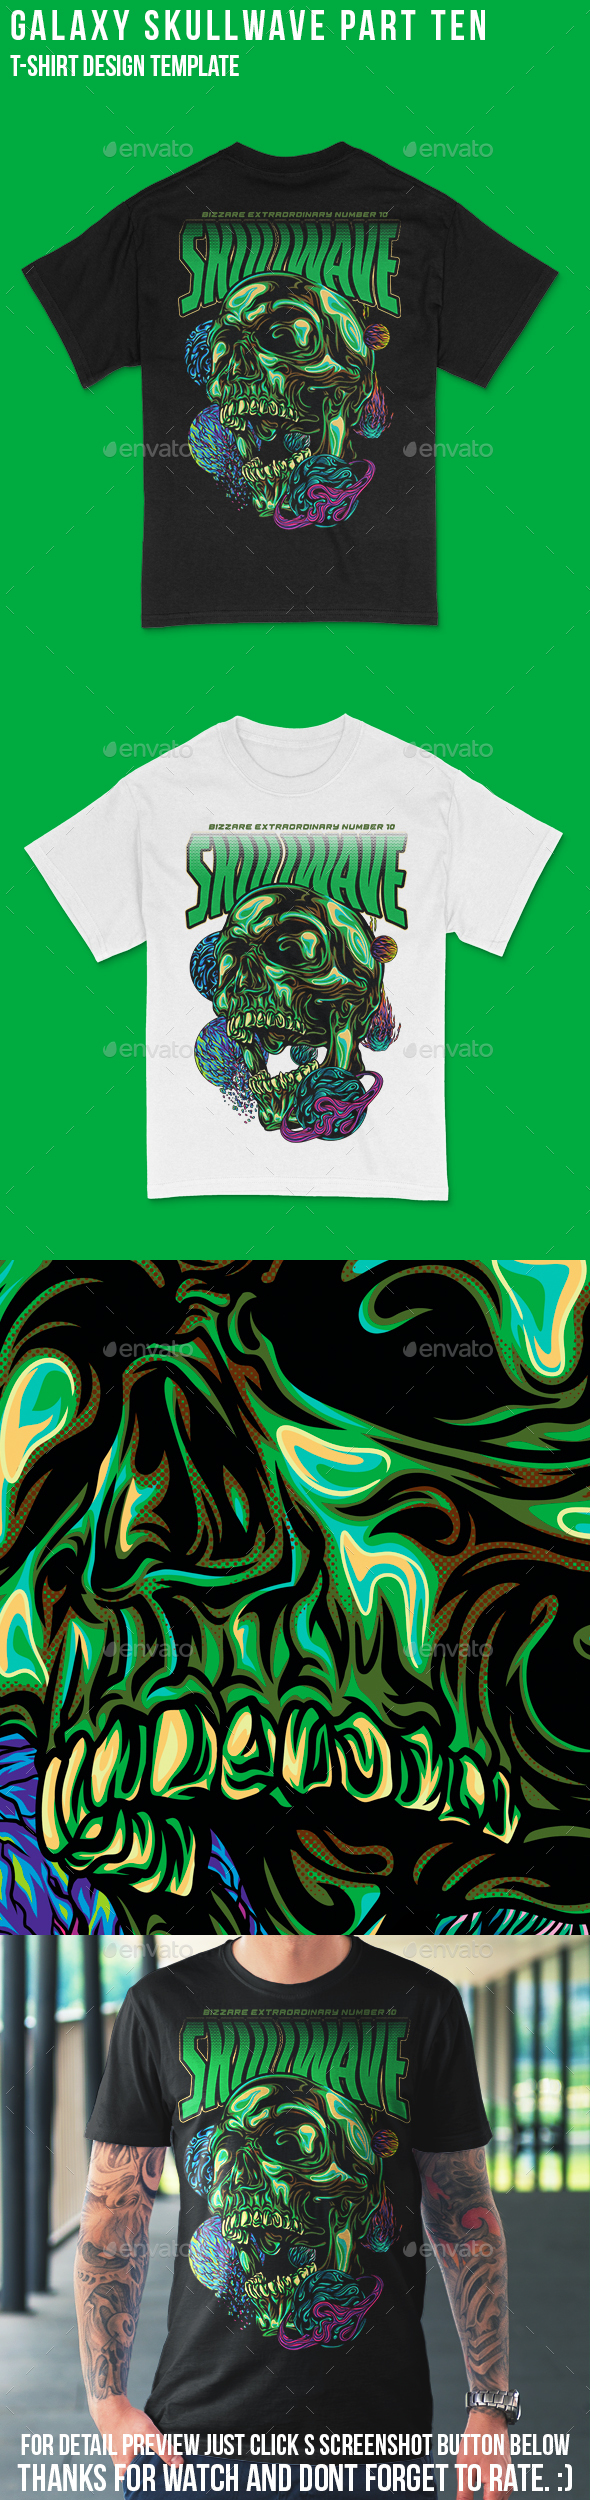 Skullwave in Space part 10 T-Shirt Design Template